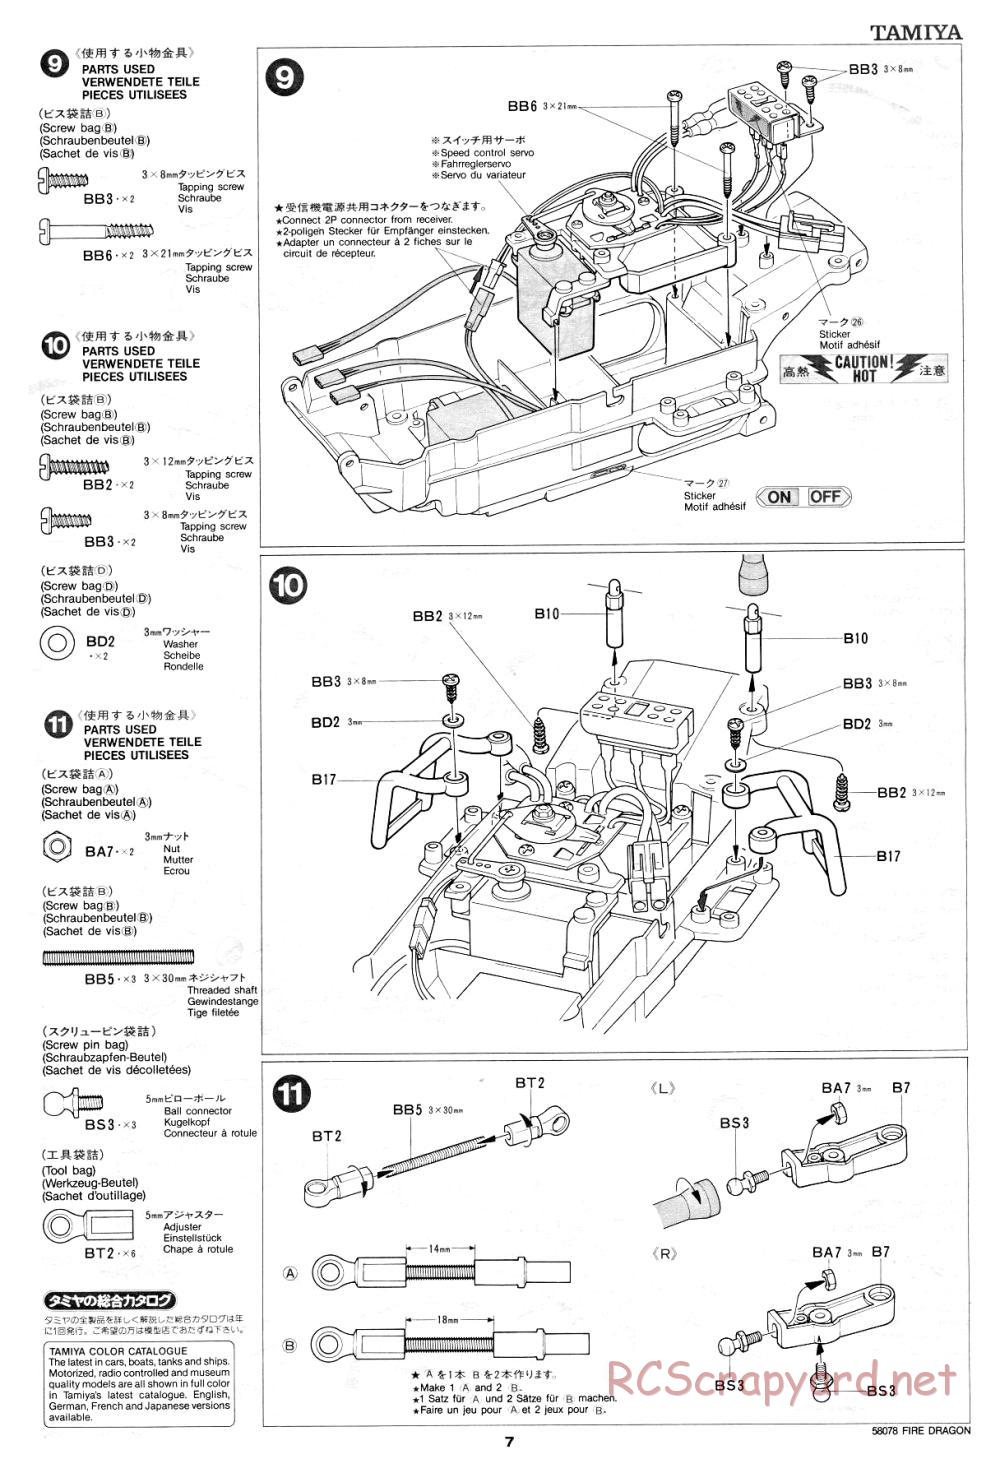 Tamiya - Fire Dragon - 58078 - Manual - Page 7